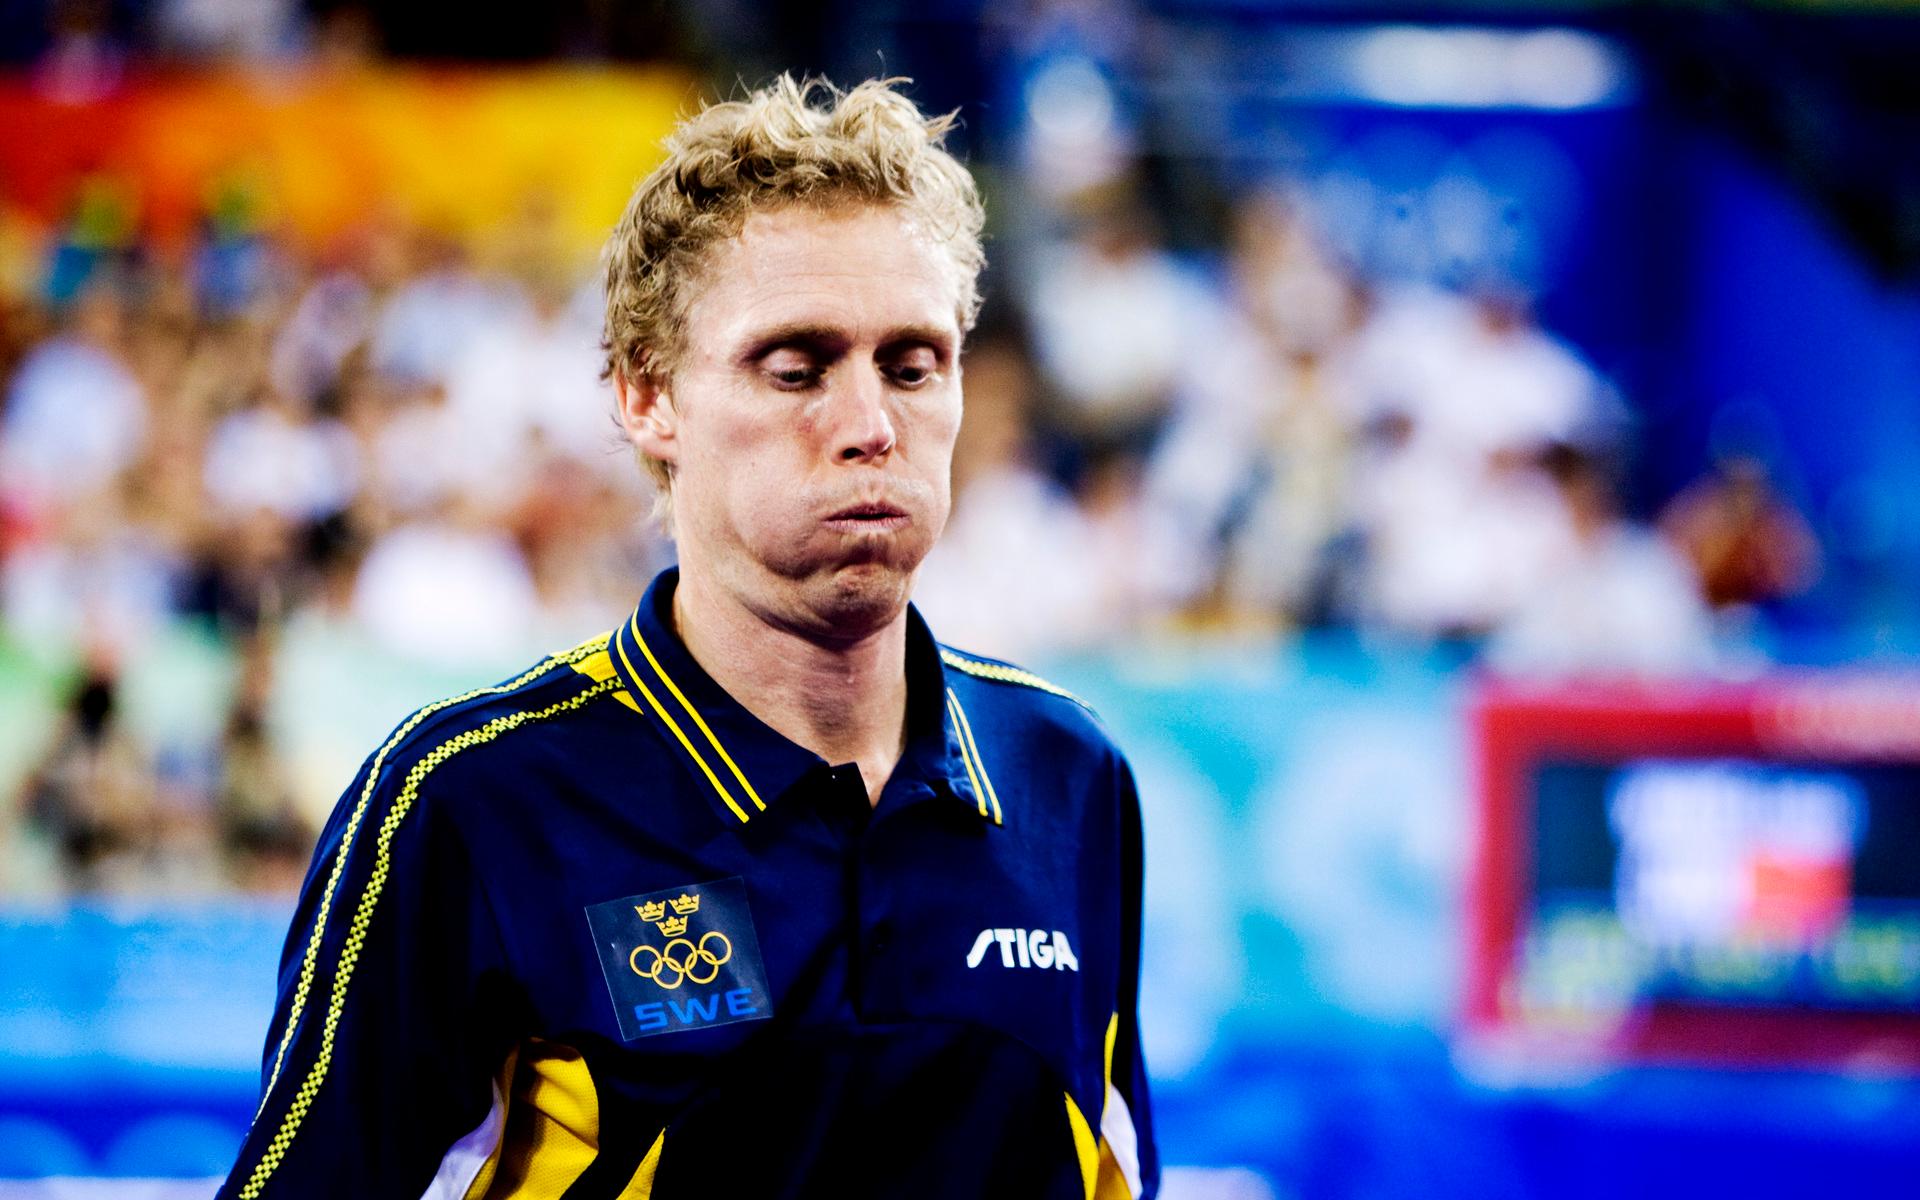 Jörgen Persson deppar efter förlusten i bronsmatchen i Peking-OS 2008.